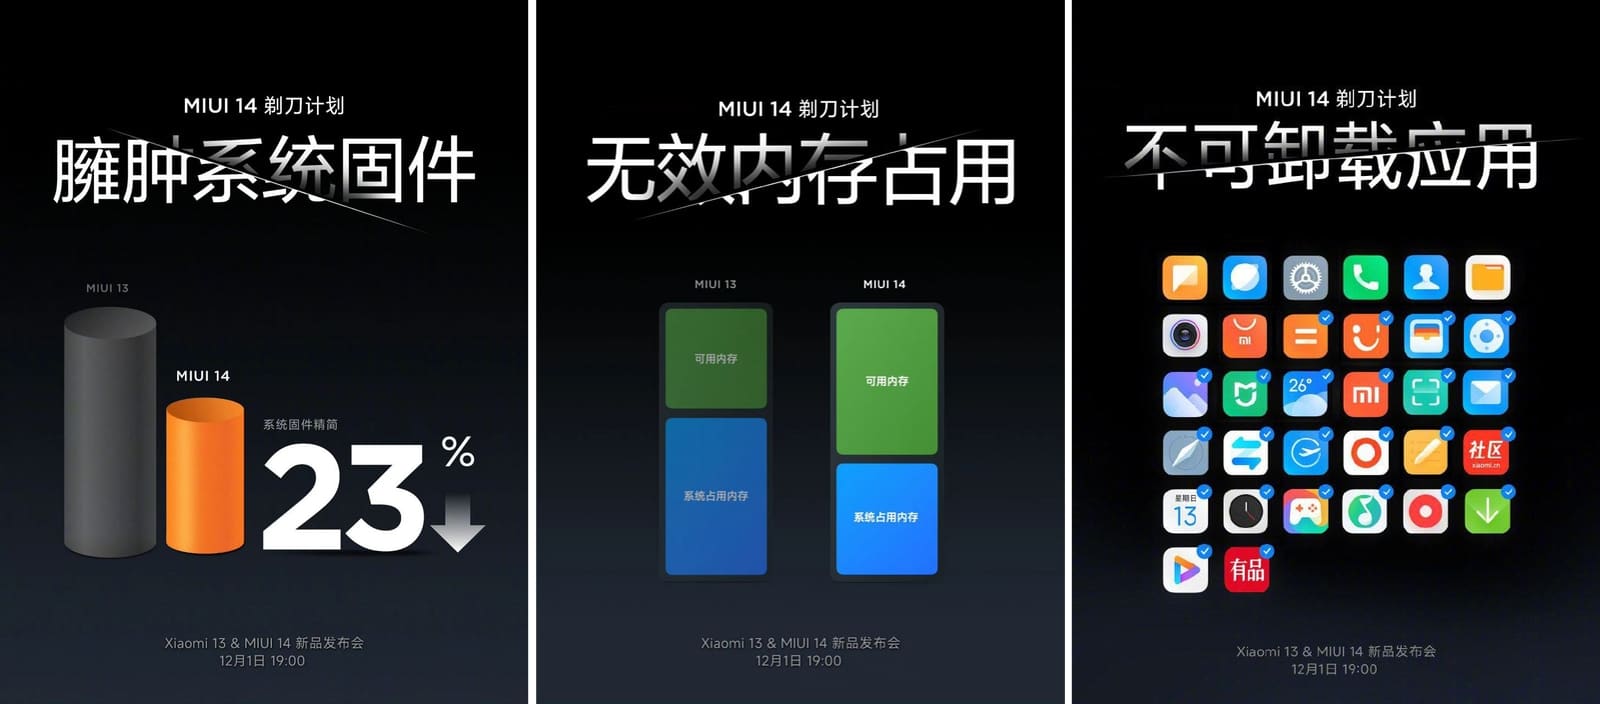 Прошить xiaomi 14. Супер иконки MIUI 14. MIUI 14 Global. Xiaomi MIUI 14. Xiaomi 13.